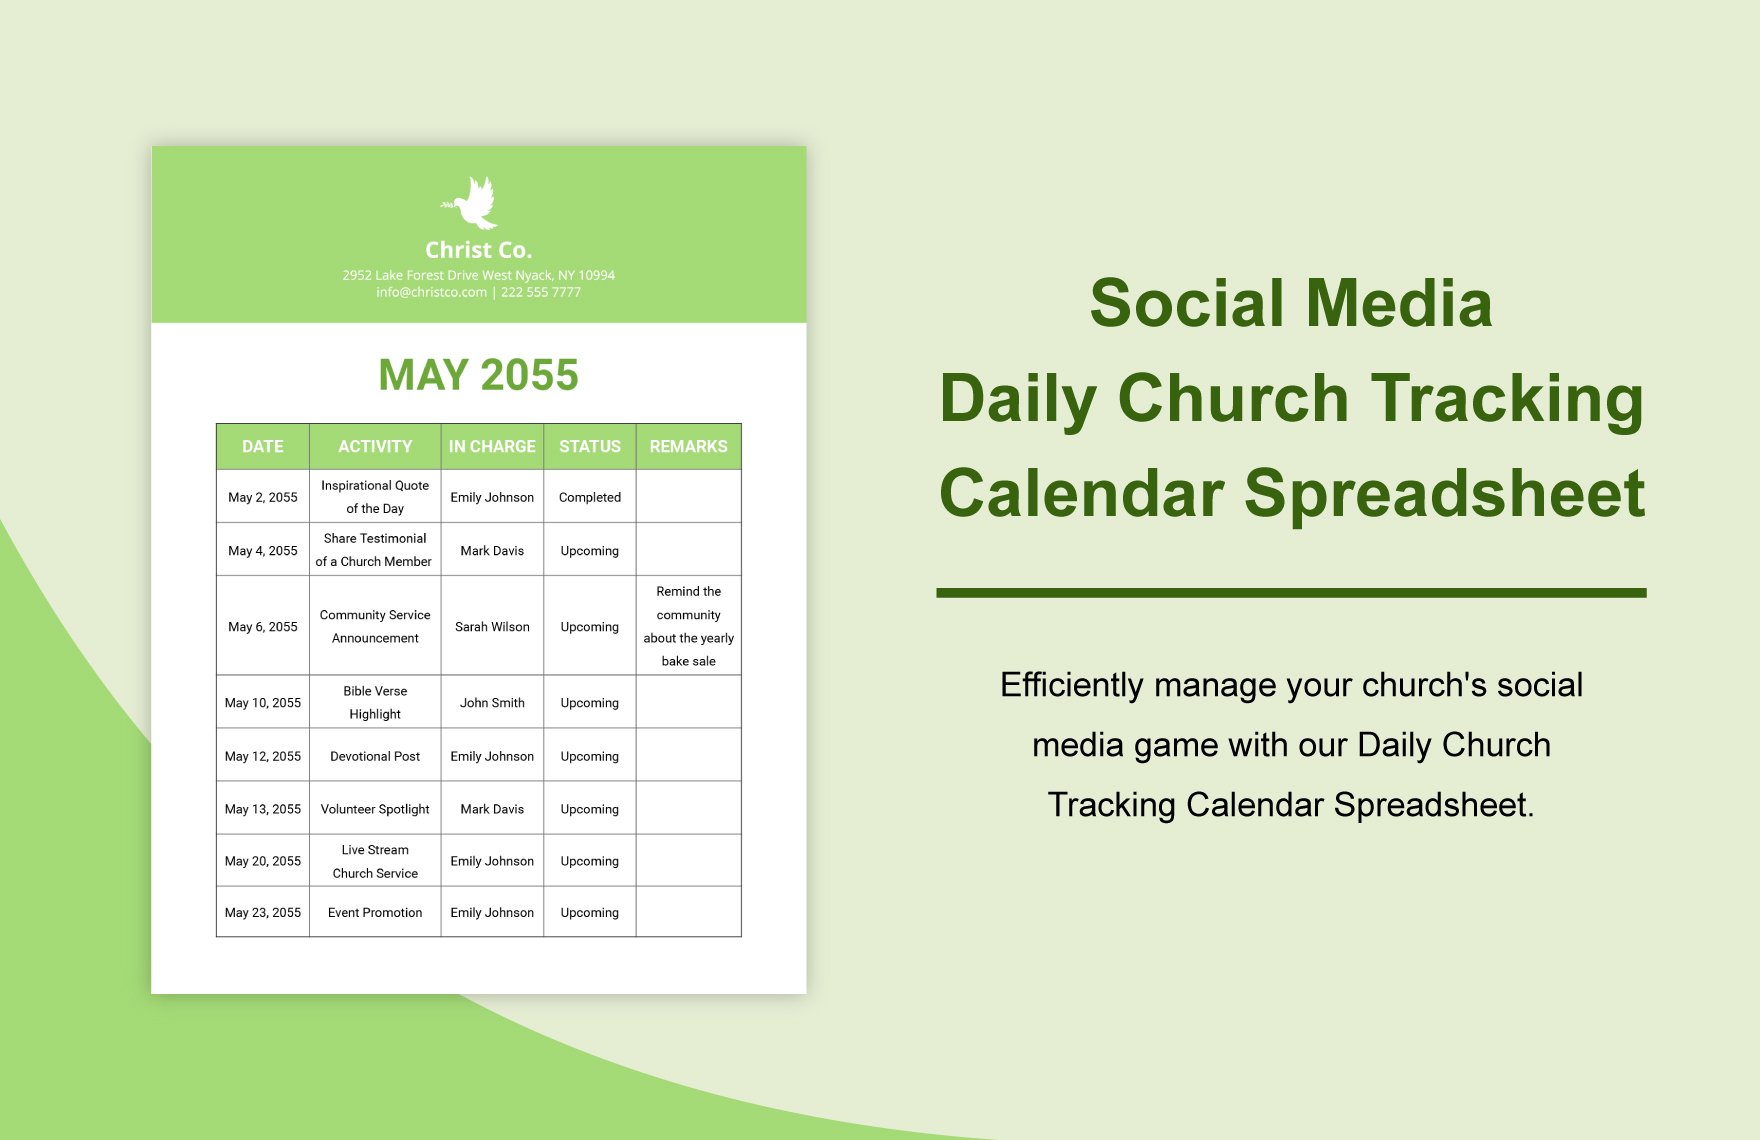 Social Media Daily Church Tracking Calendar Spreadsheet